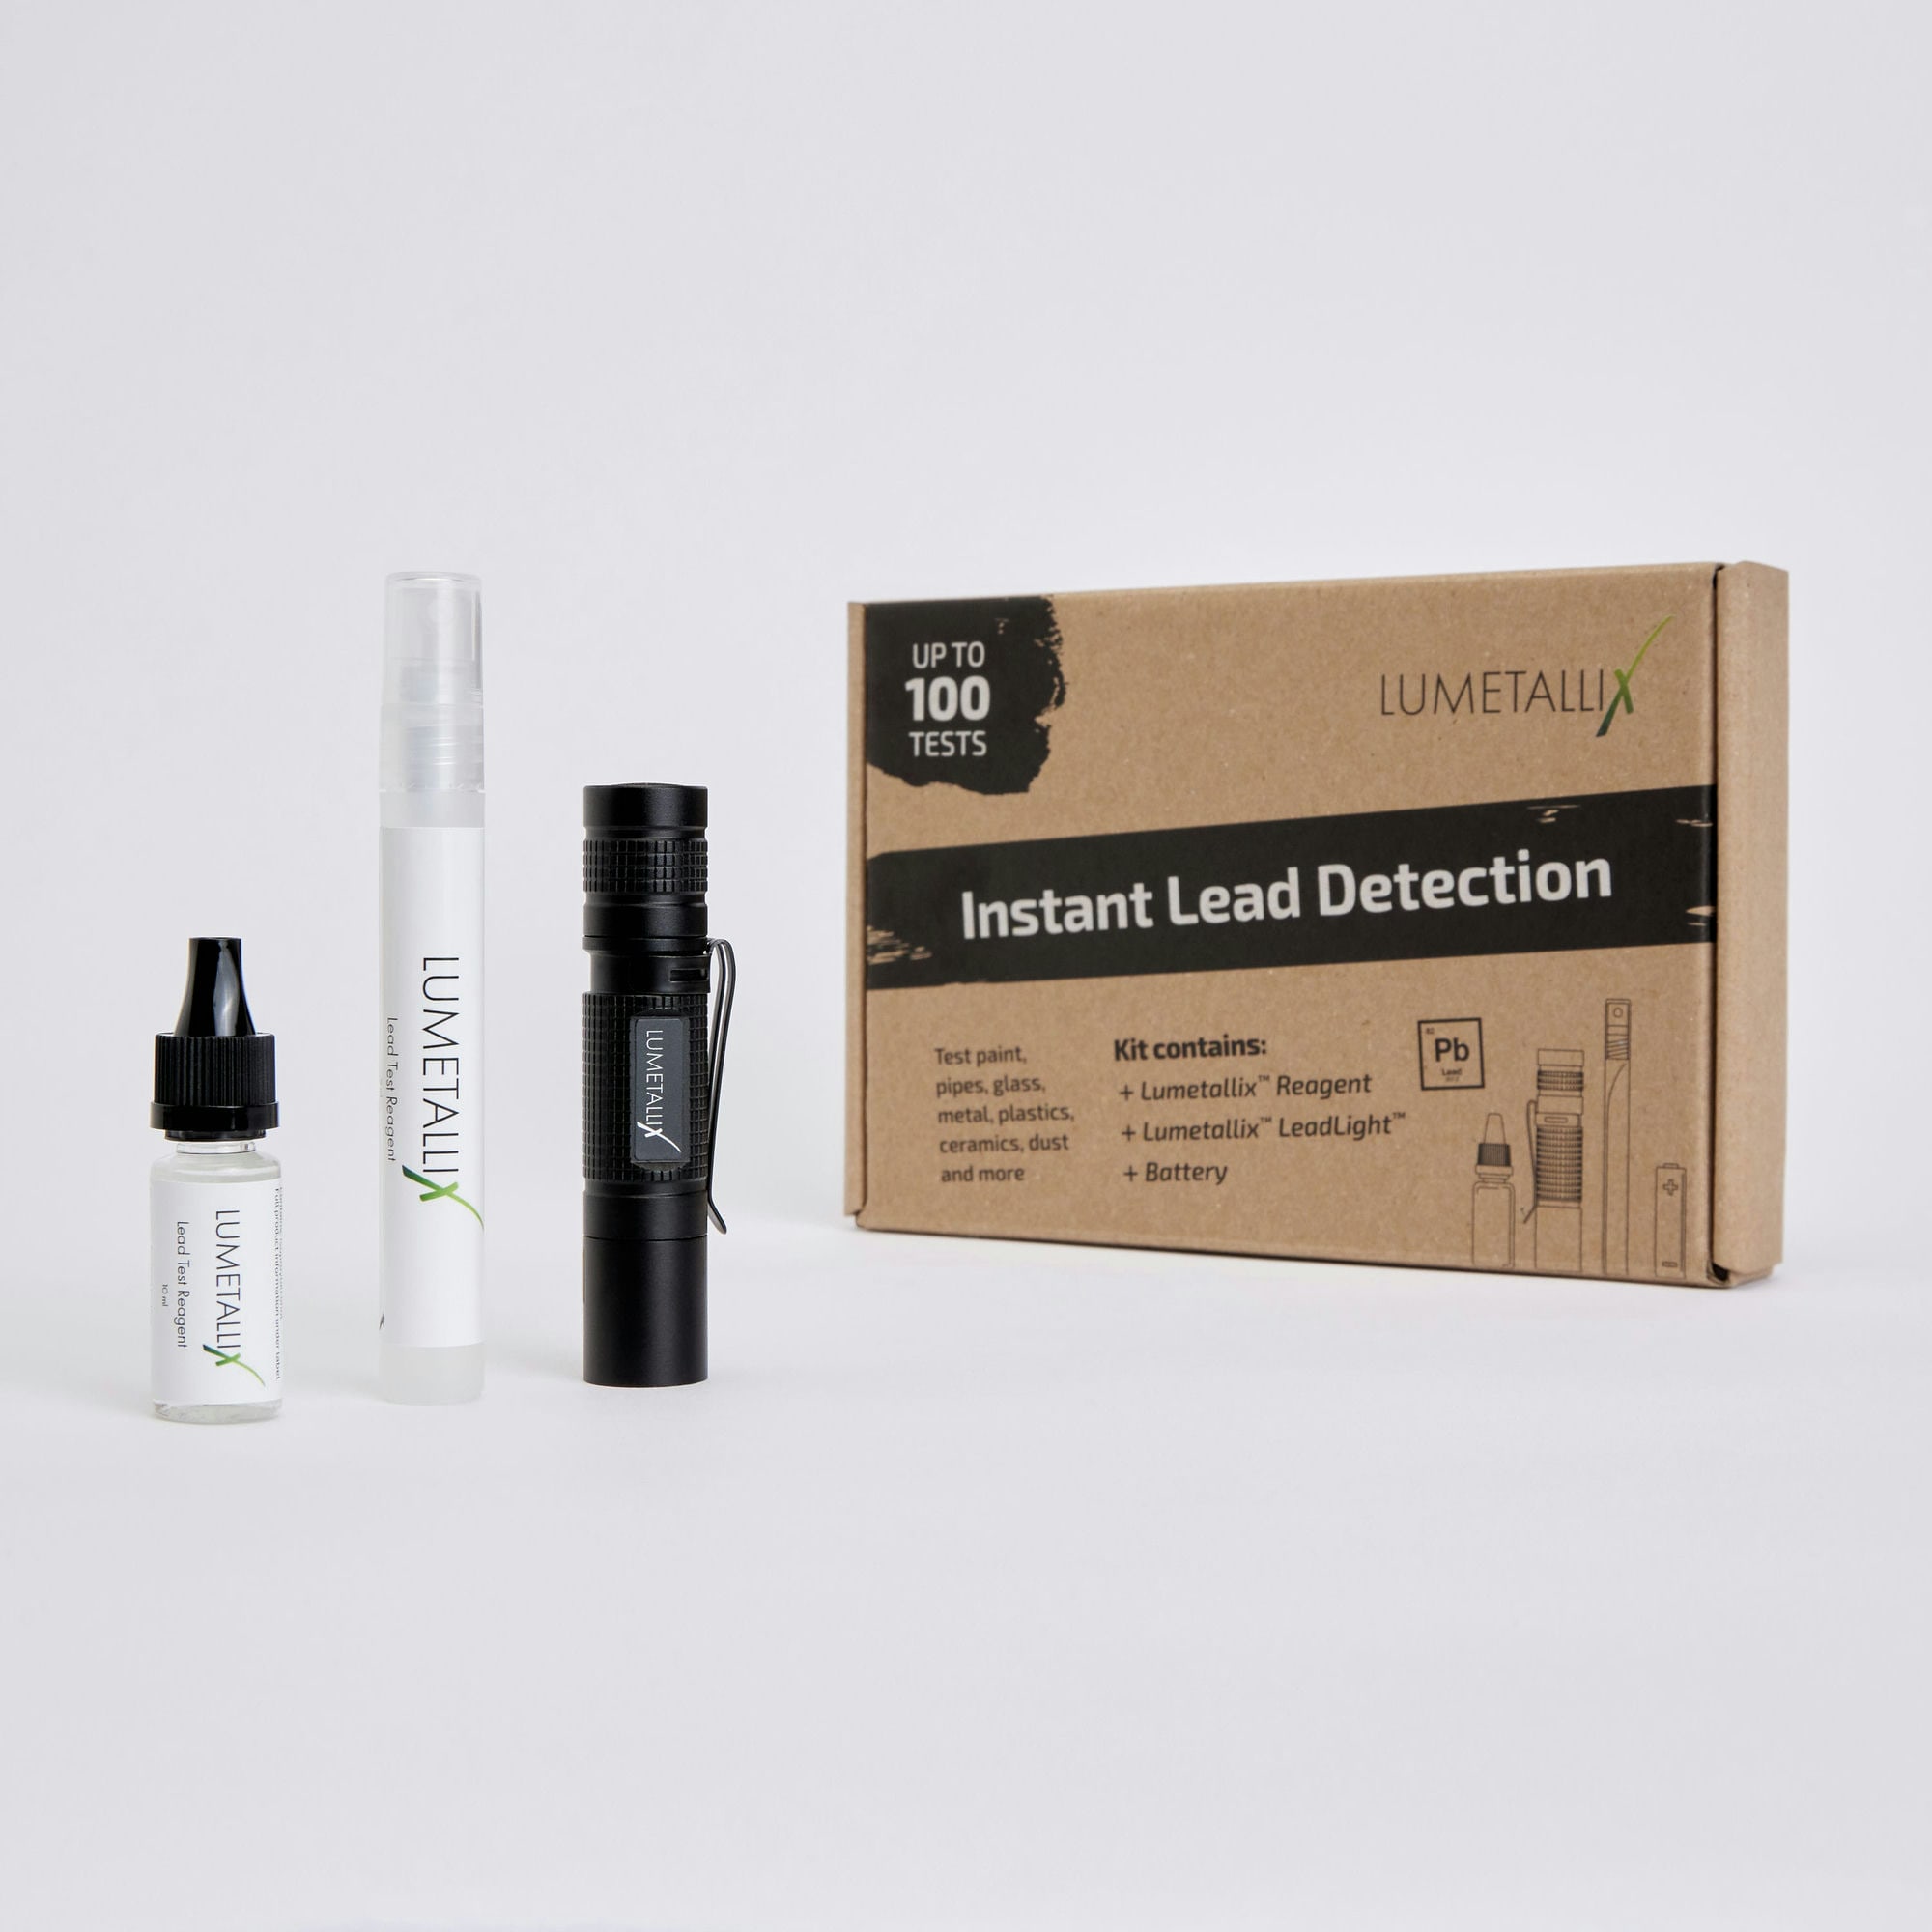 L-01 - Instant Lead Detection 05 Lumetallix products box